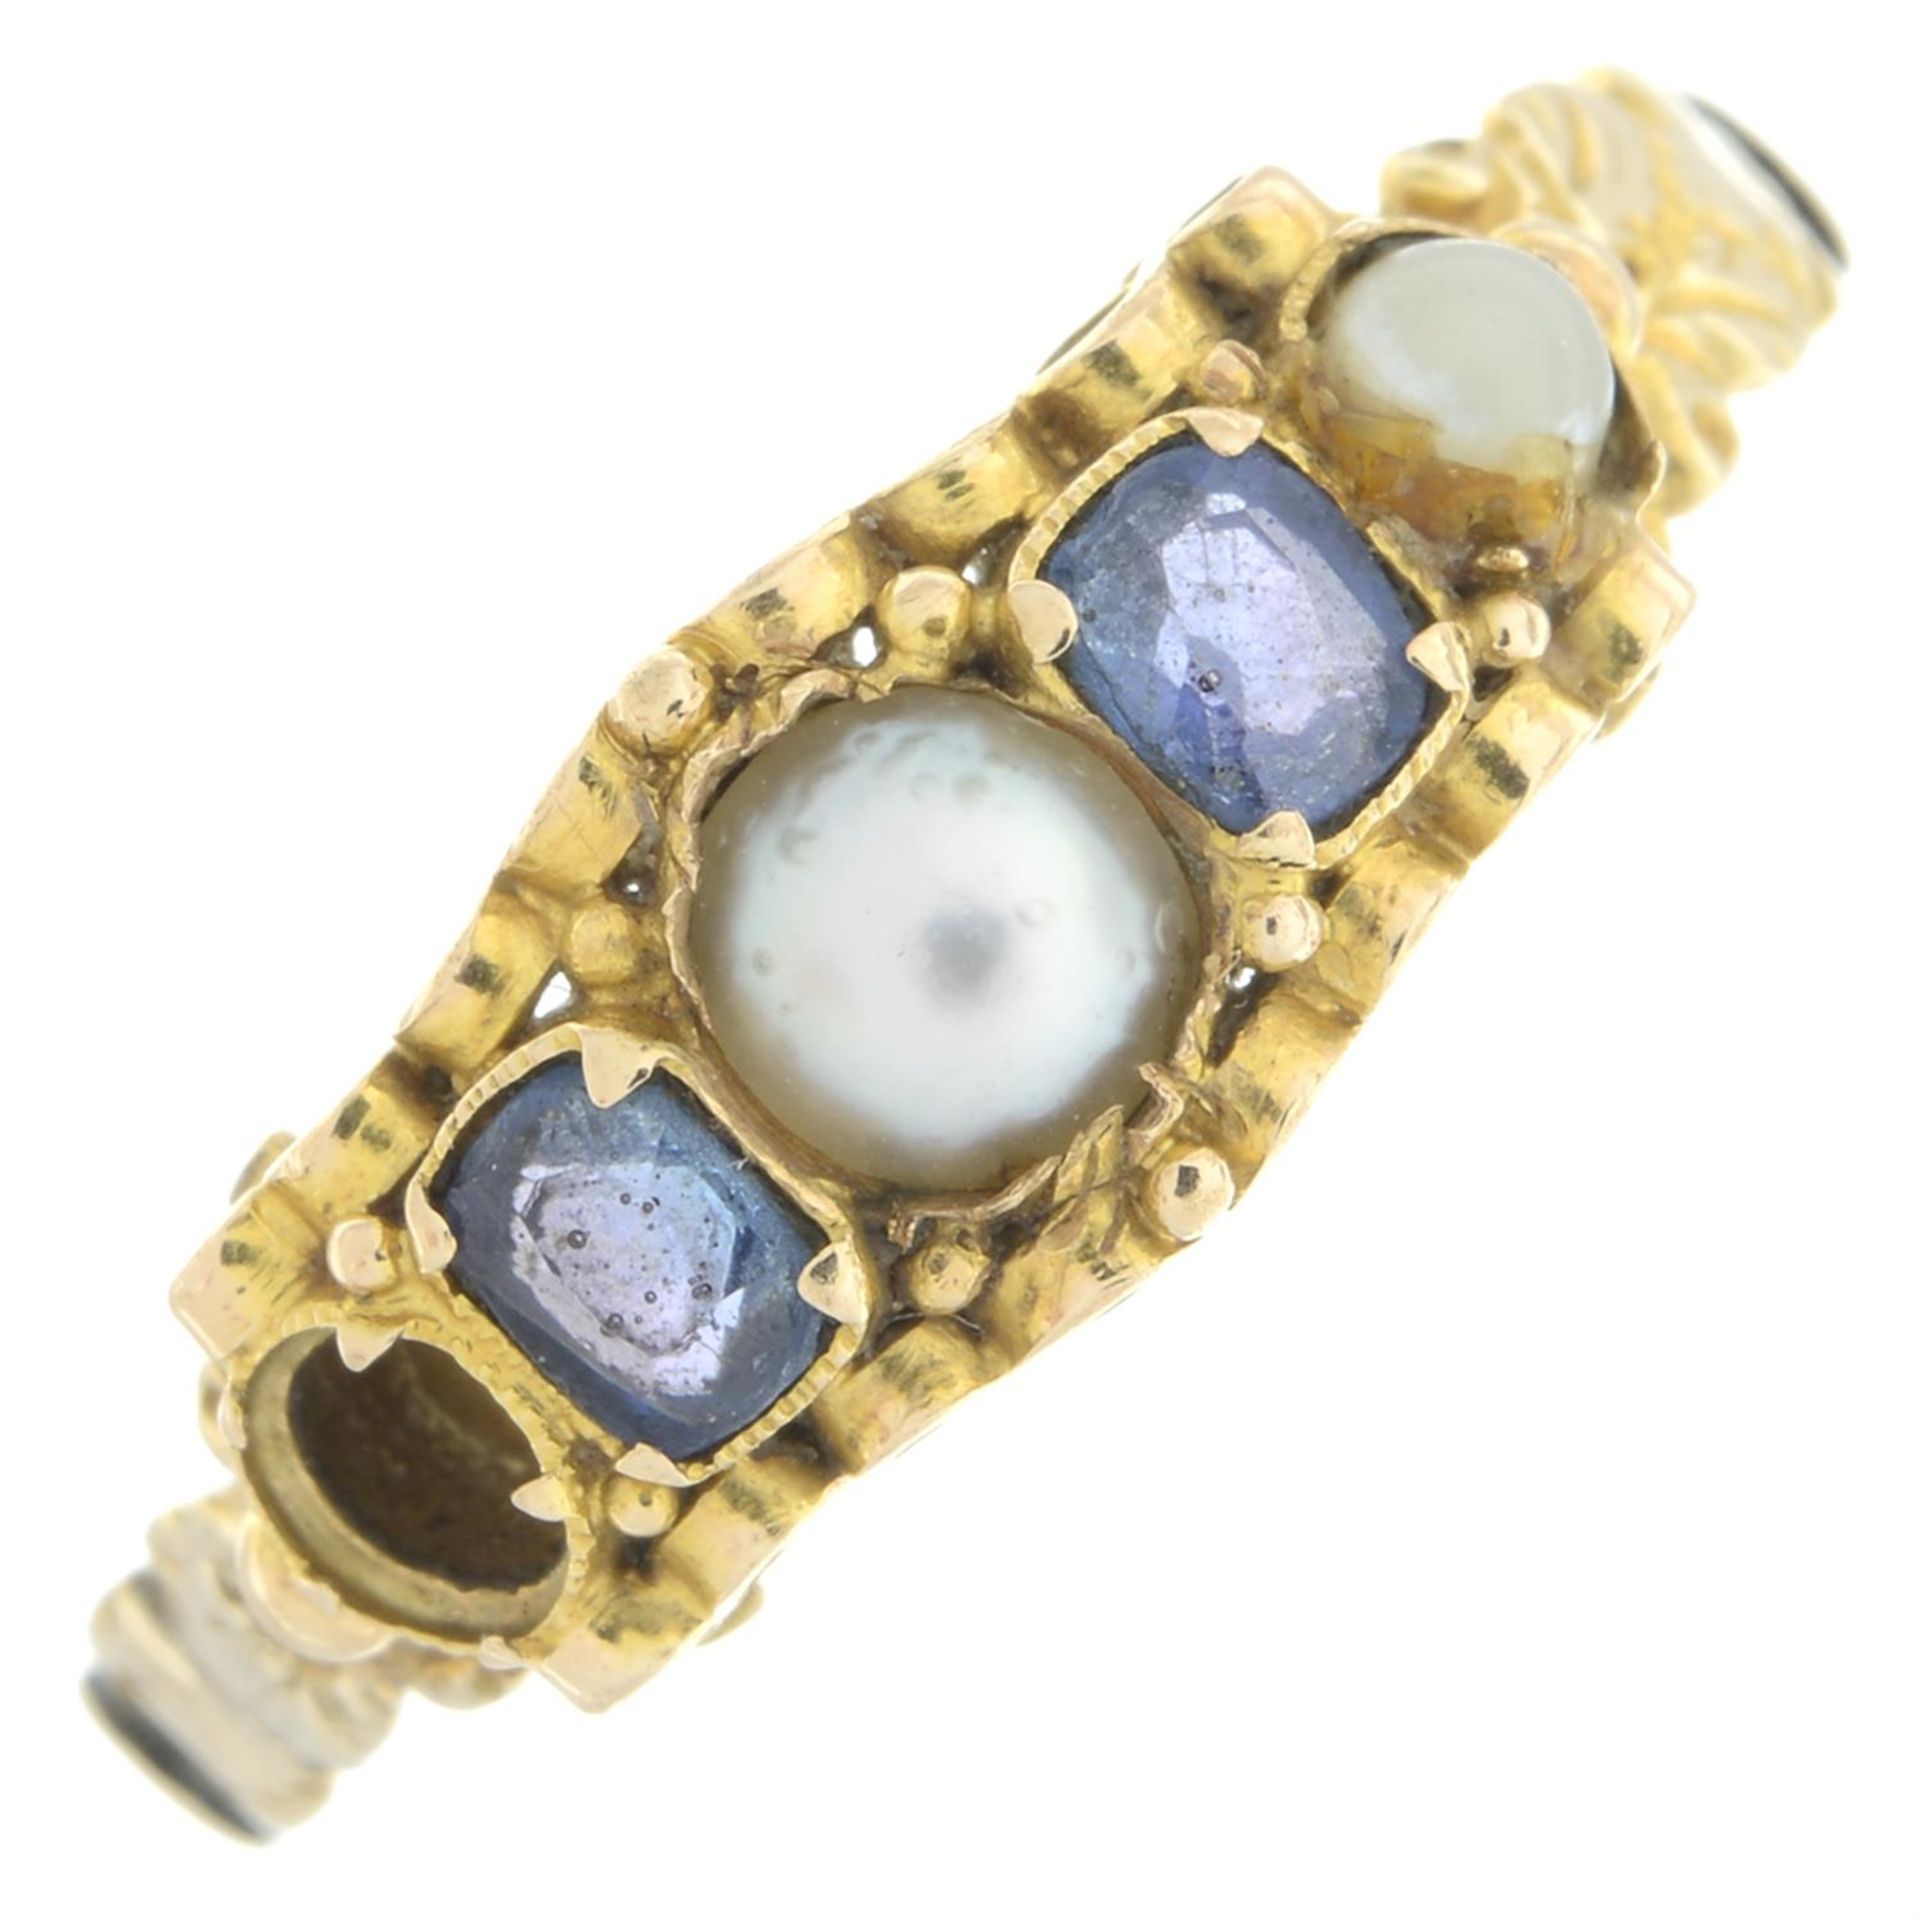 19th century garnet-topped-doublet & split pearl ring.